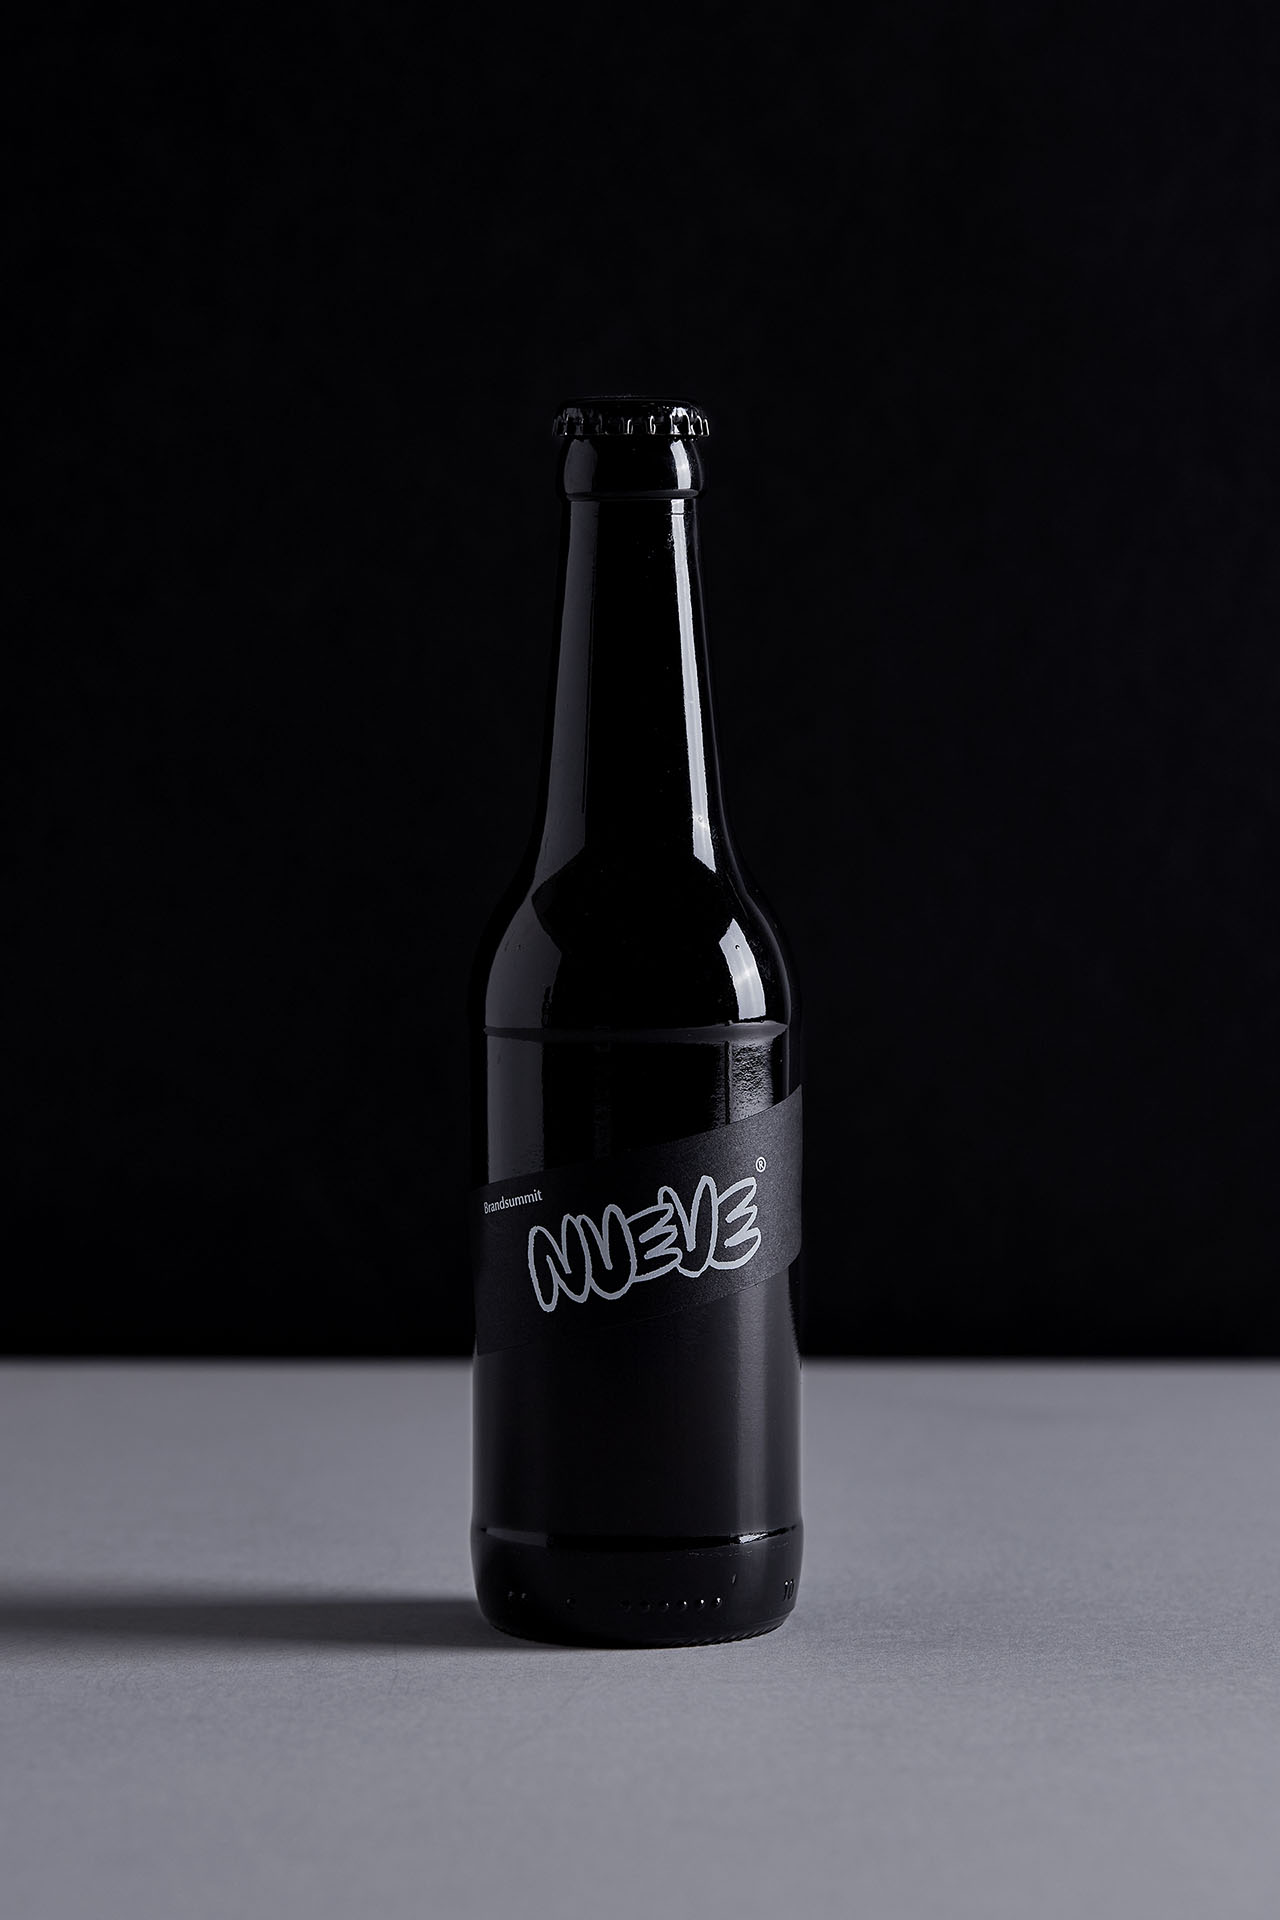 Brandsummit beer design - diseño etiqueta cerveza 14